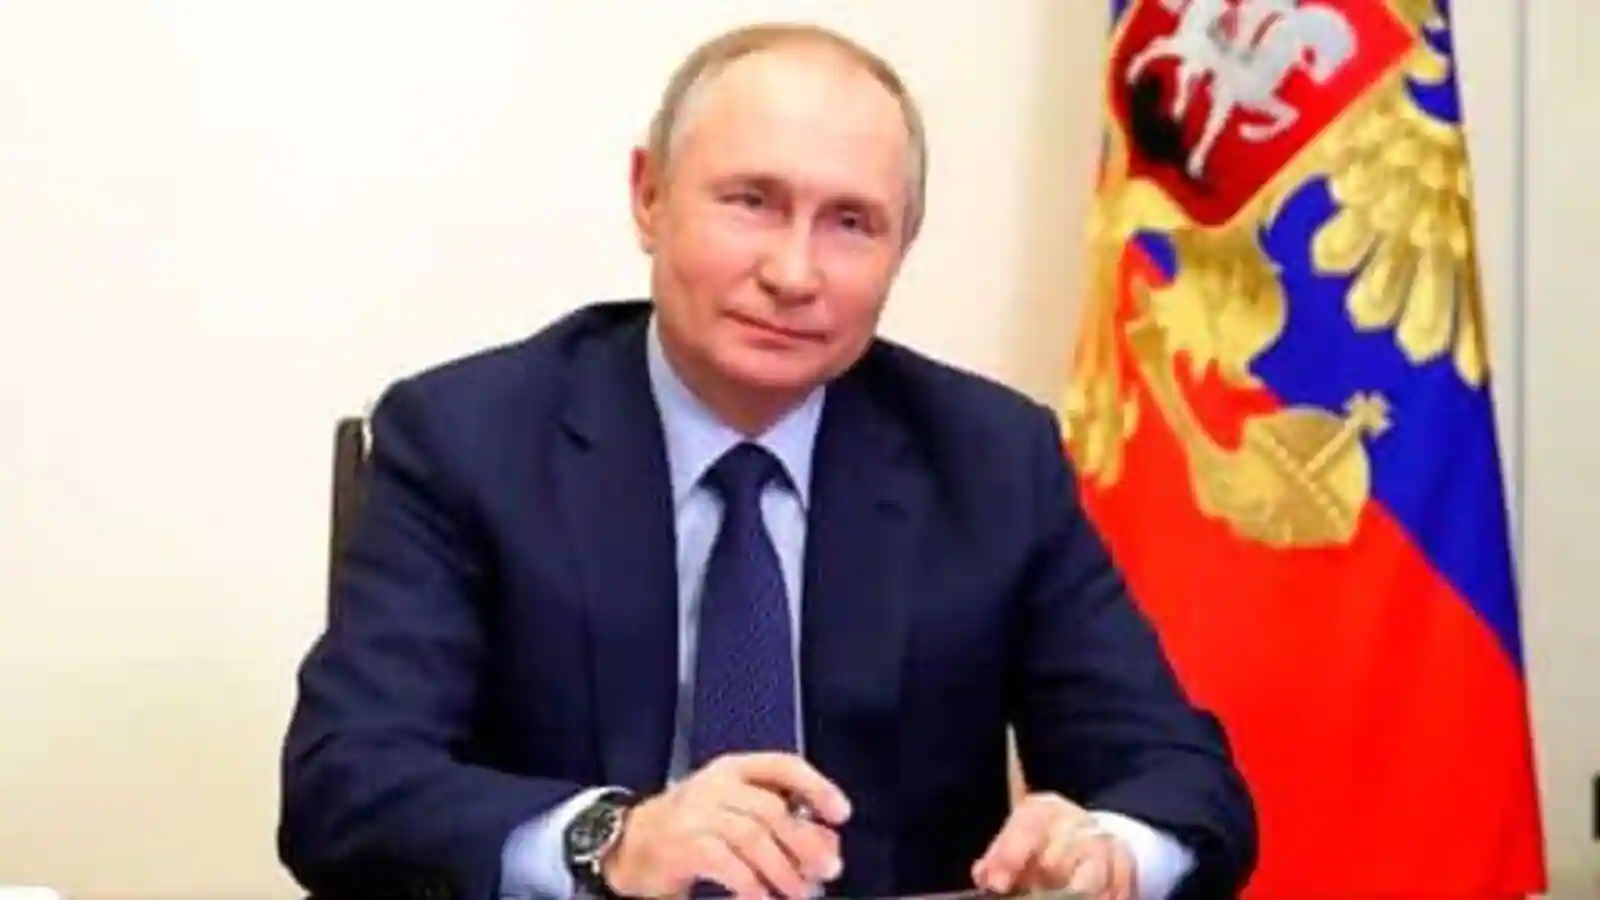 Vladimir Putin’s health may not be good as expert notices ‘black hands’: Report